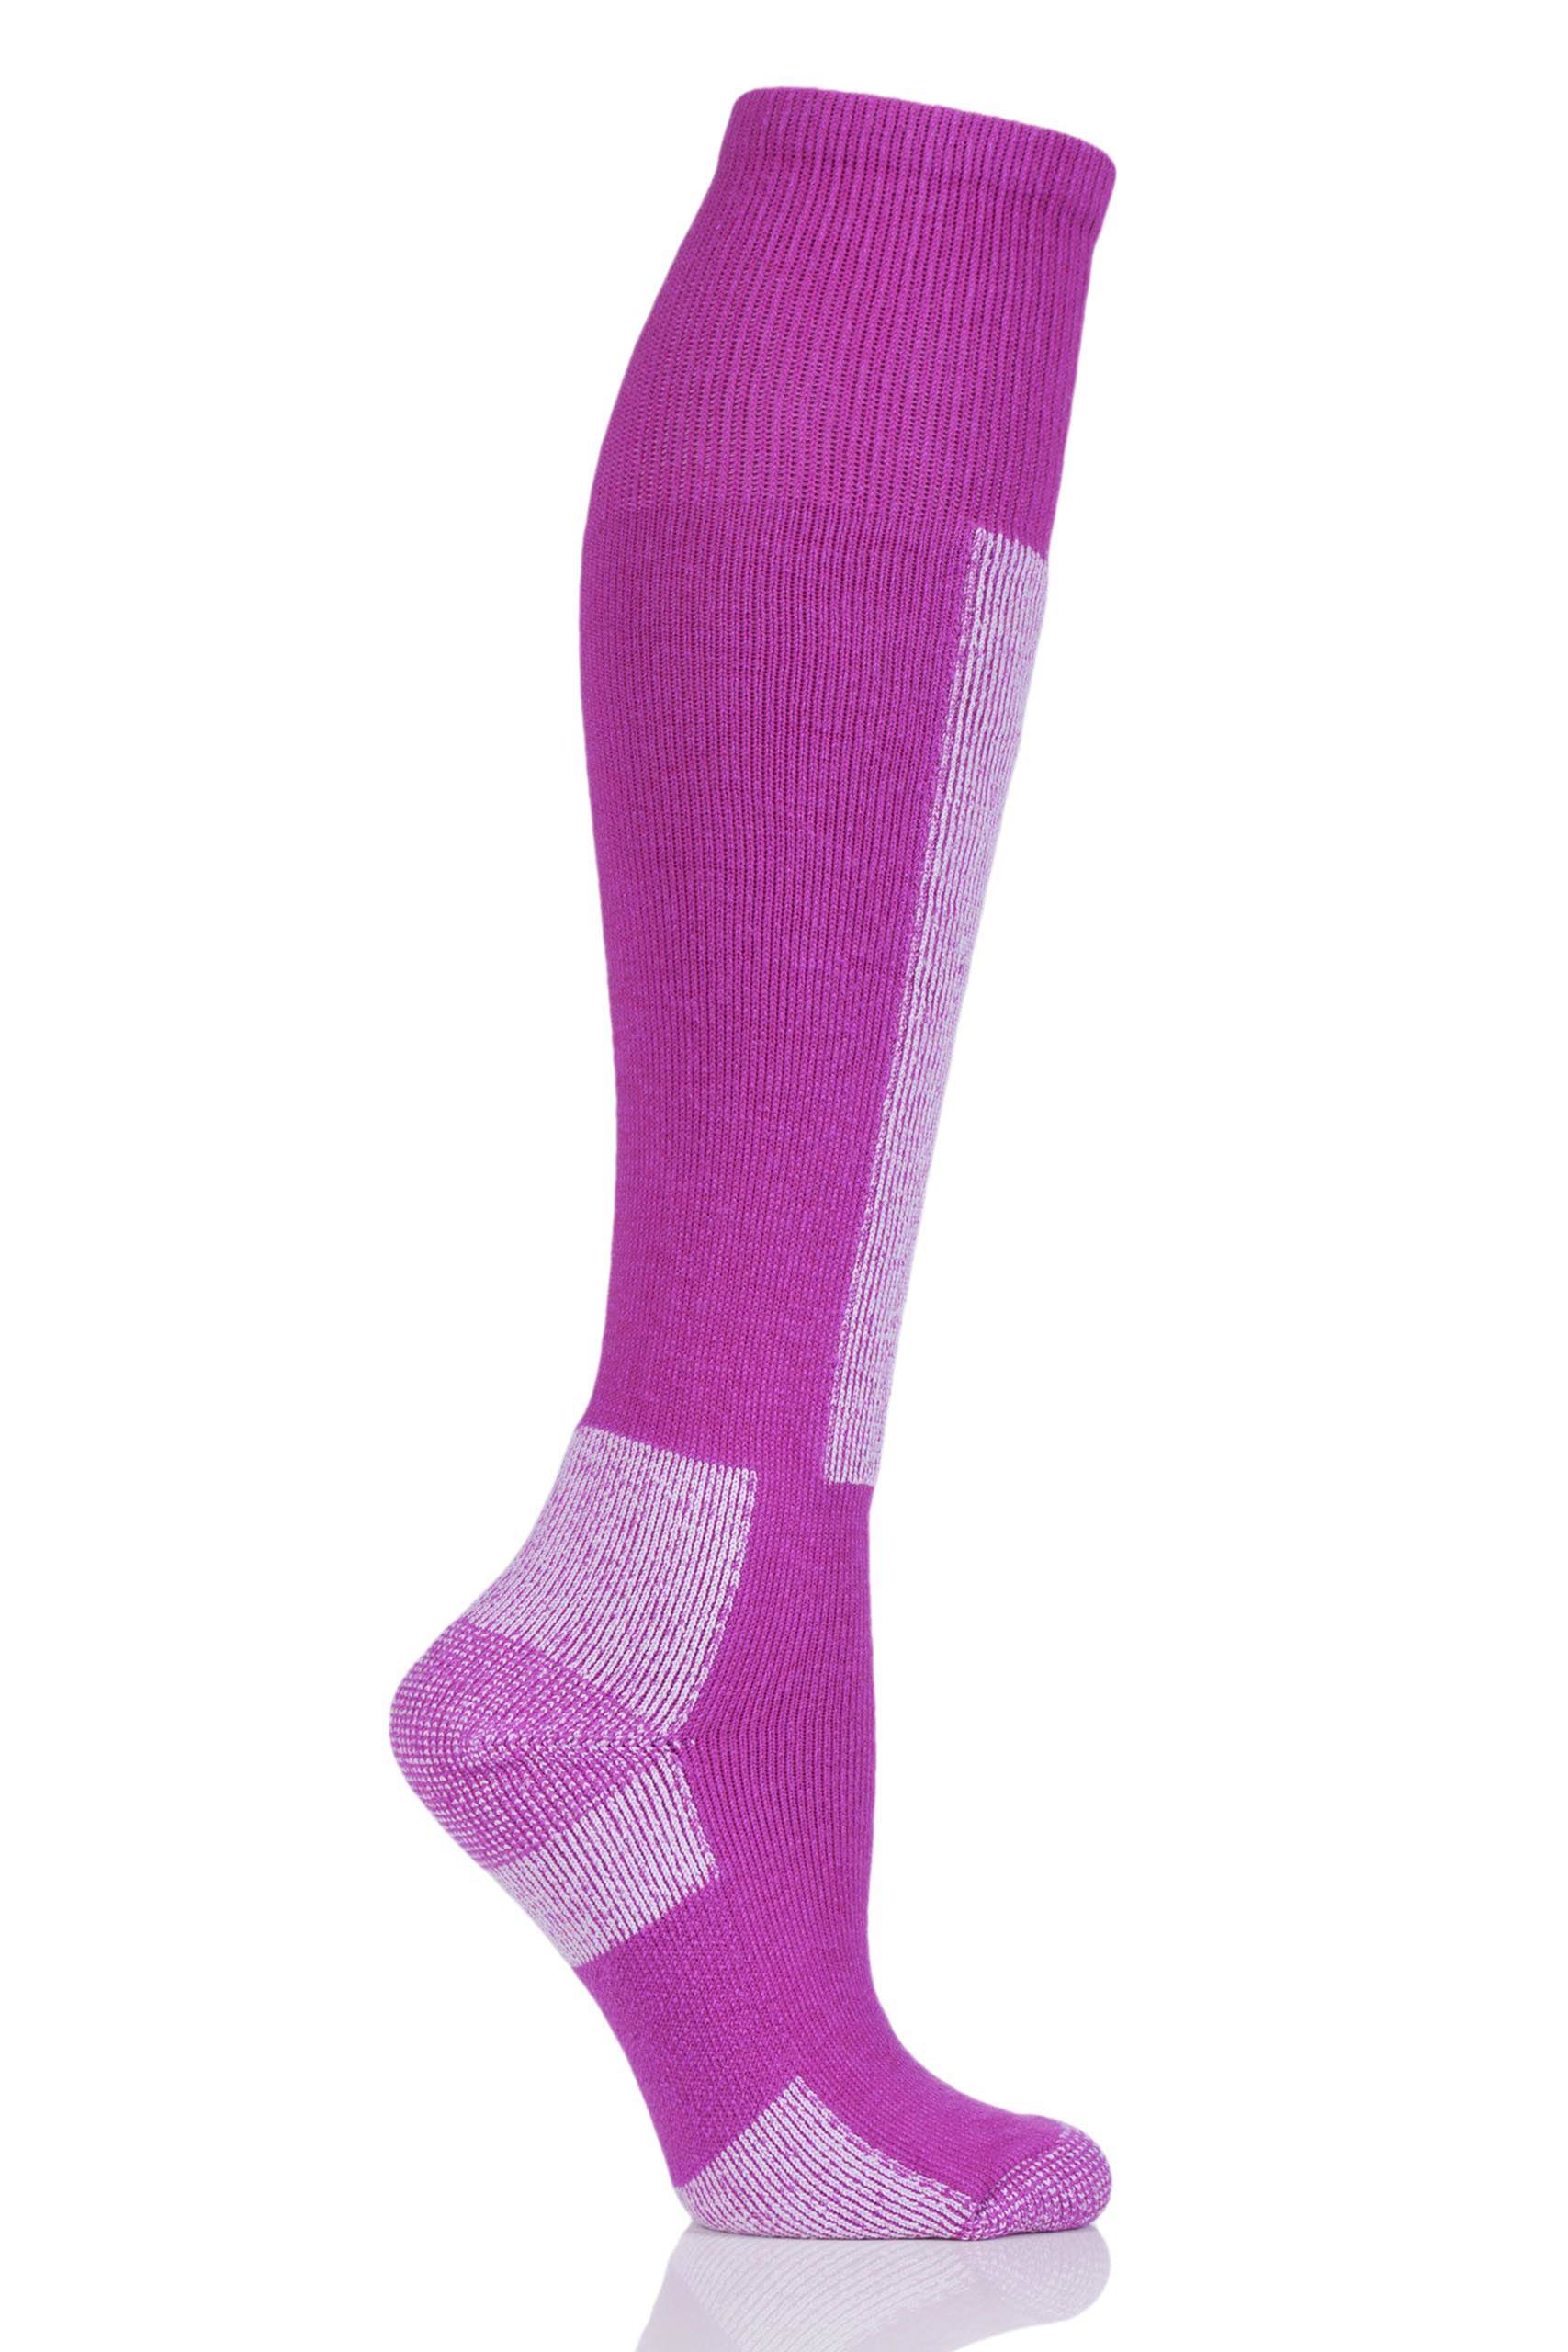 Thorlo Lightweight Ski Socks Purple UK 2.5-4.5